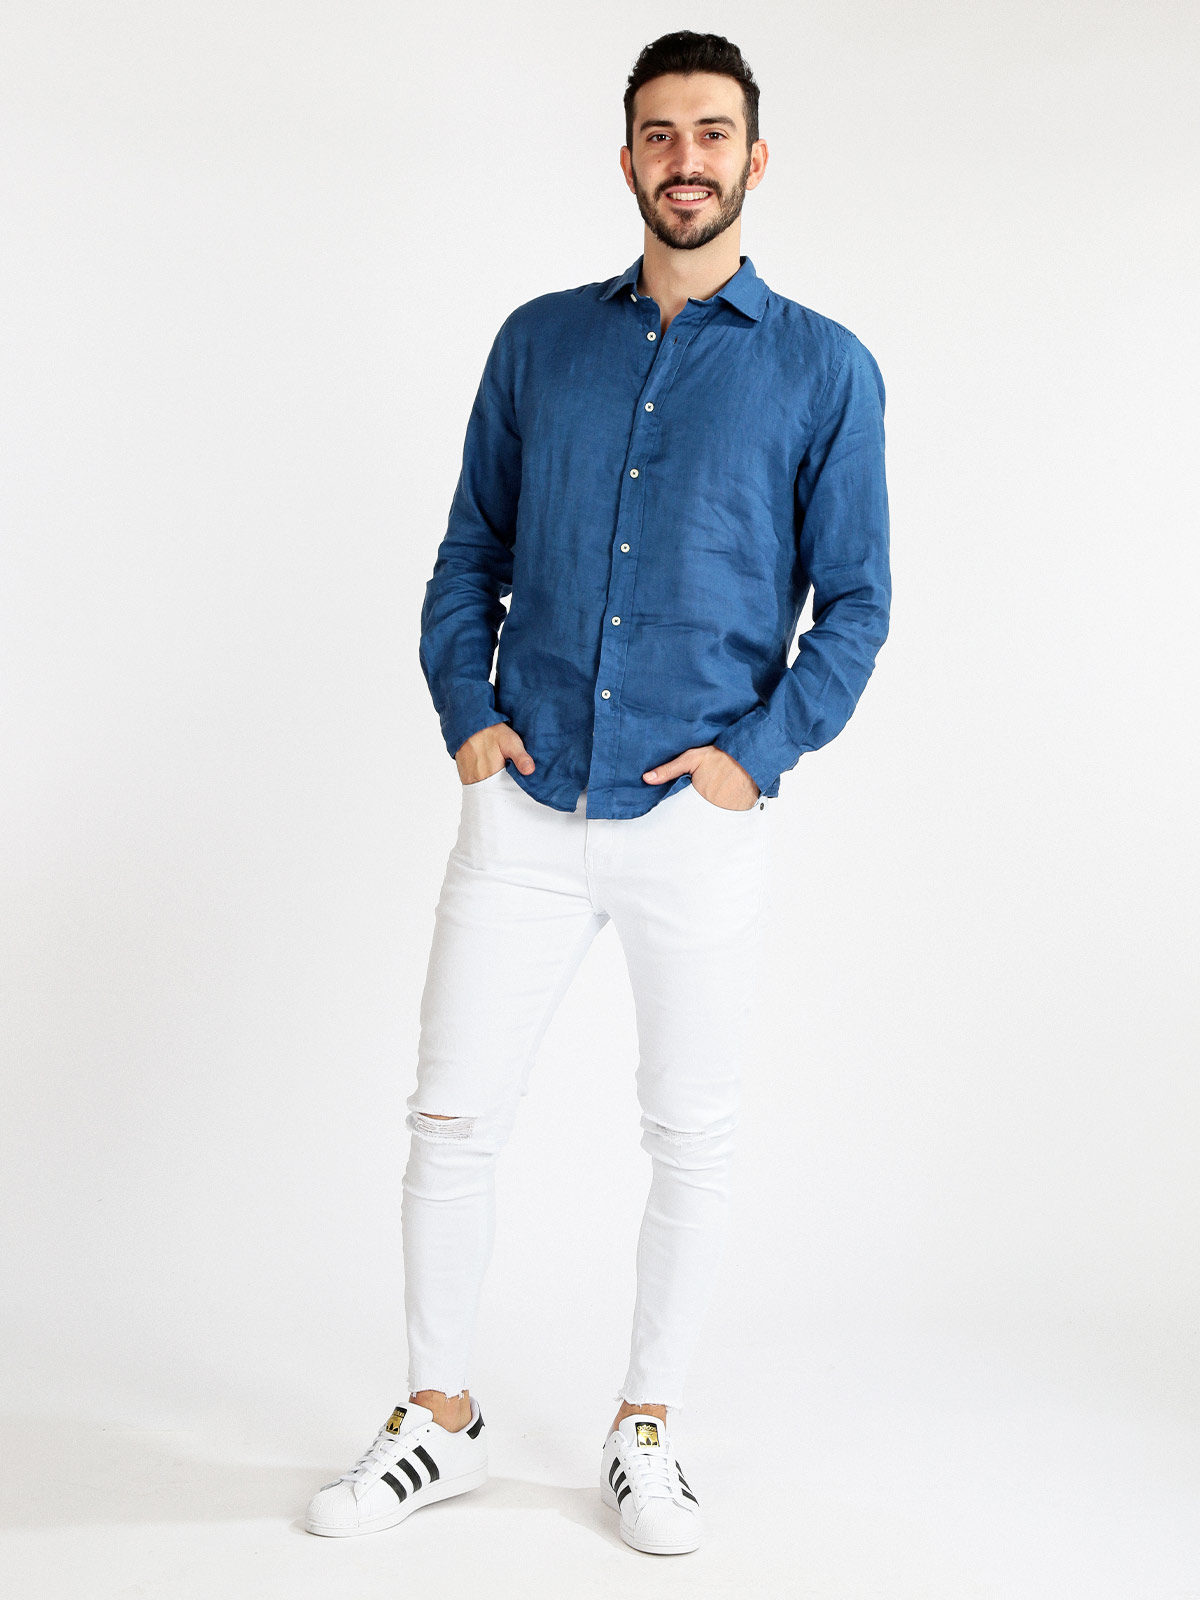 Swiss Bring representative Yes Design Pantaloni bianchi da uomo in cotone: in offerta a 19.99€ su  Mecshopping.it